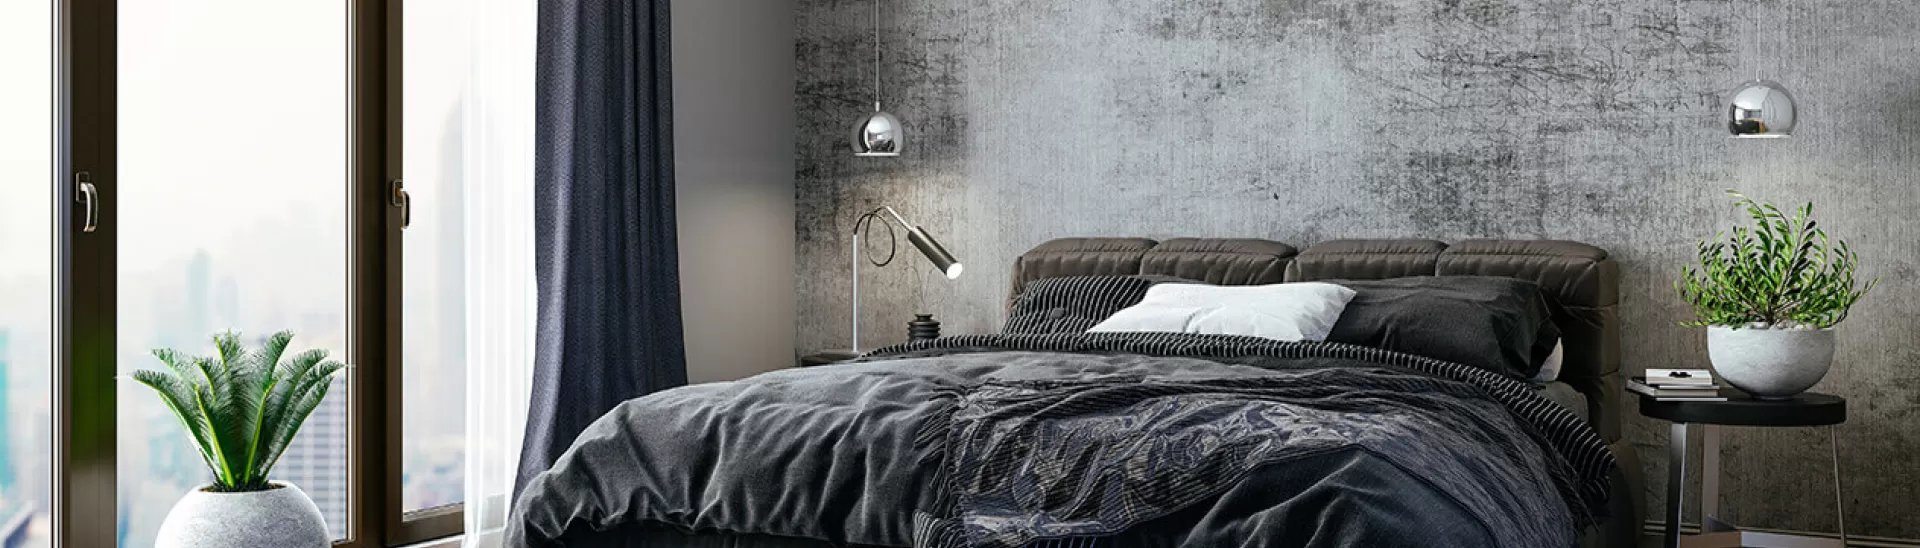 Wall Texture Design for Bedroom, Best Texture Paint Design Ideas ...